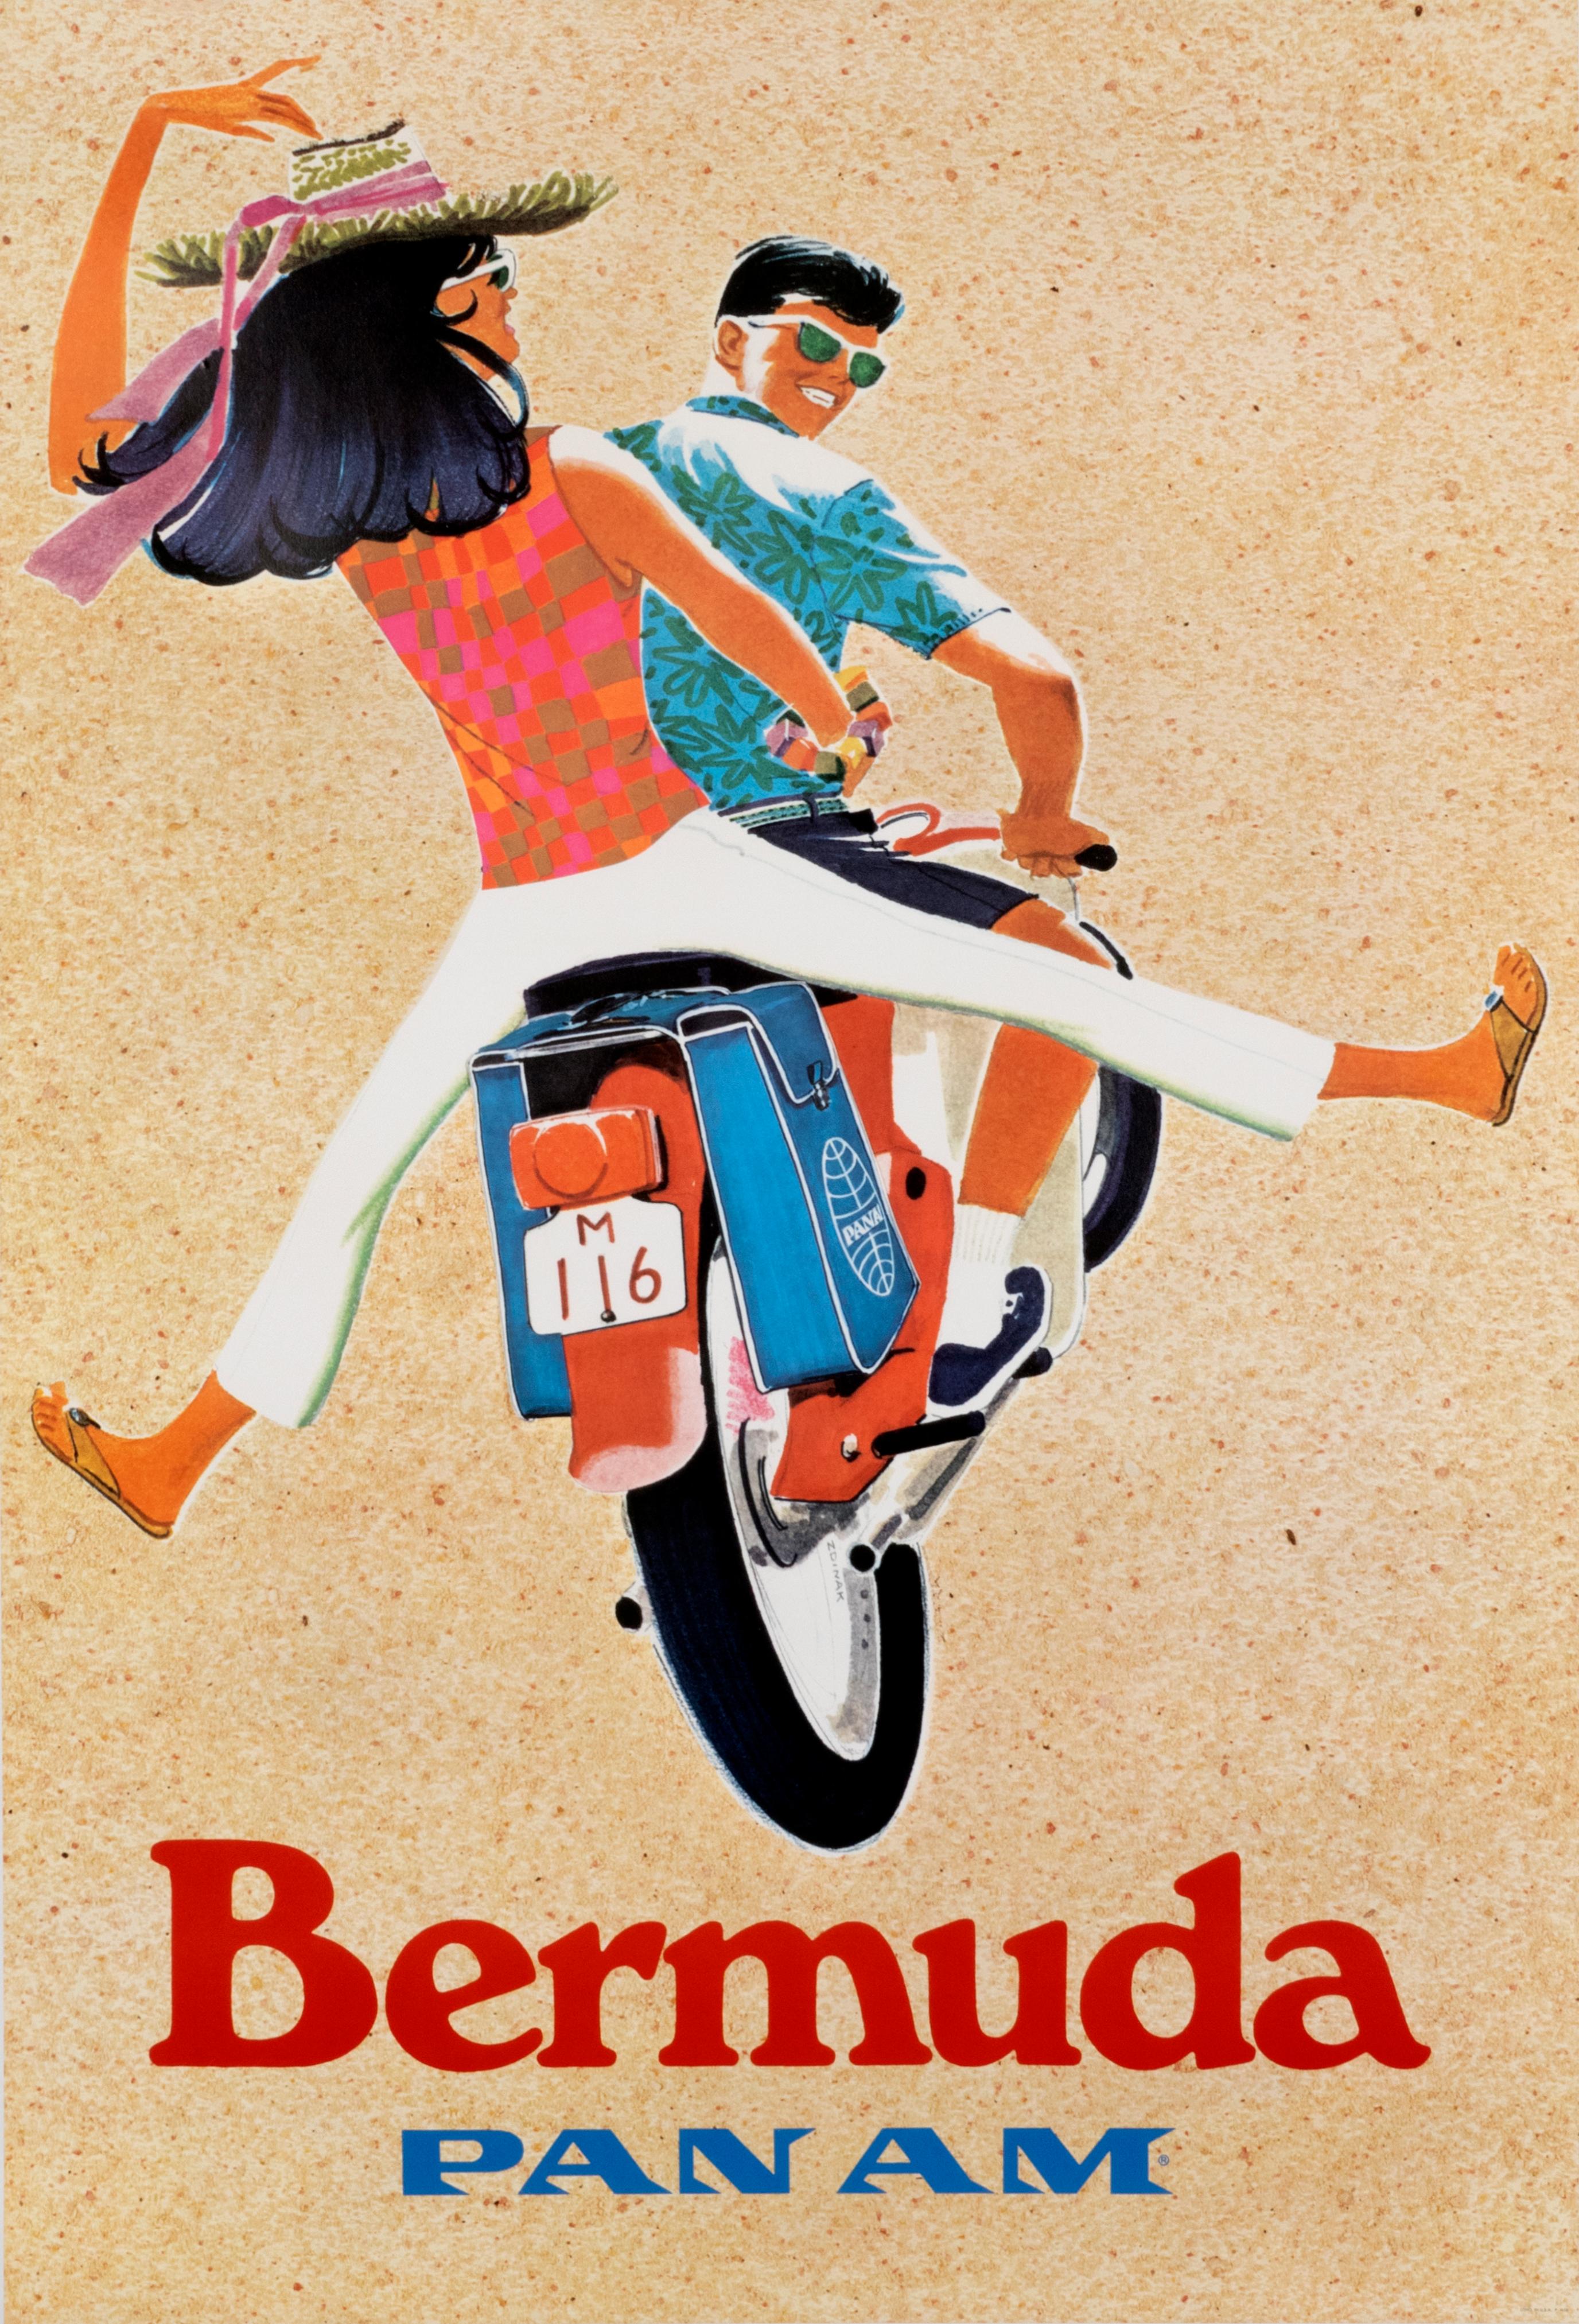 "Bermuda - Pan Am" Original Vintage Travel Poster - Print by Zdinak